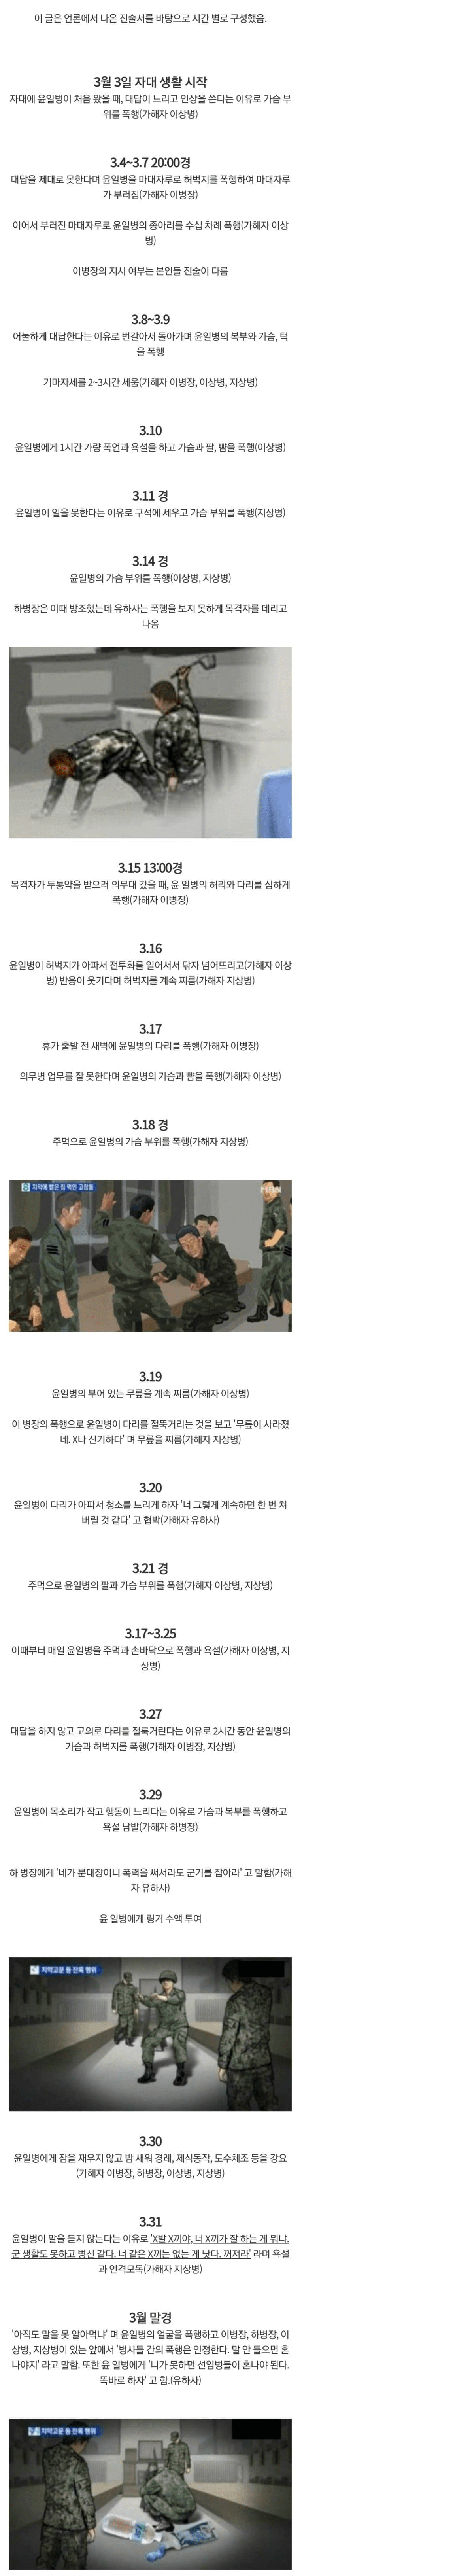 nokbeon.net-10년전 발생한 최악의 군대 살인사건-2번 이미지